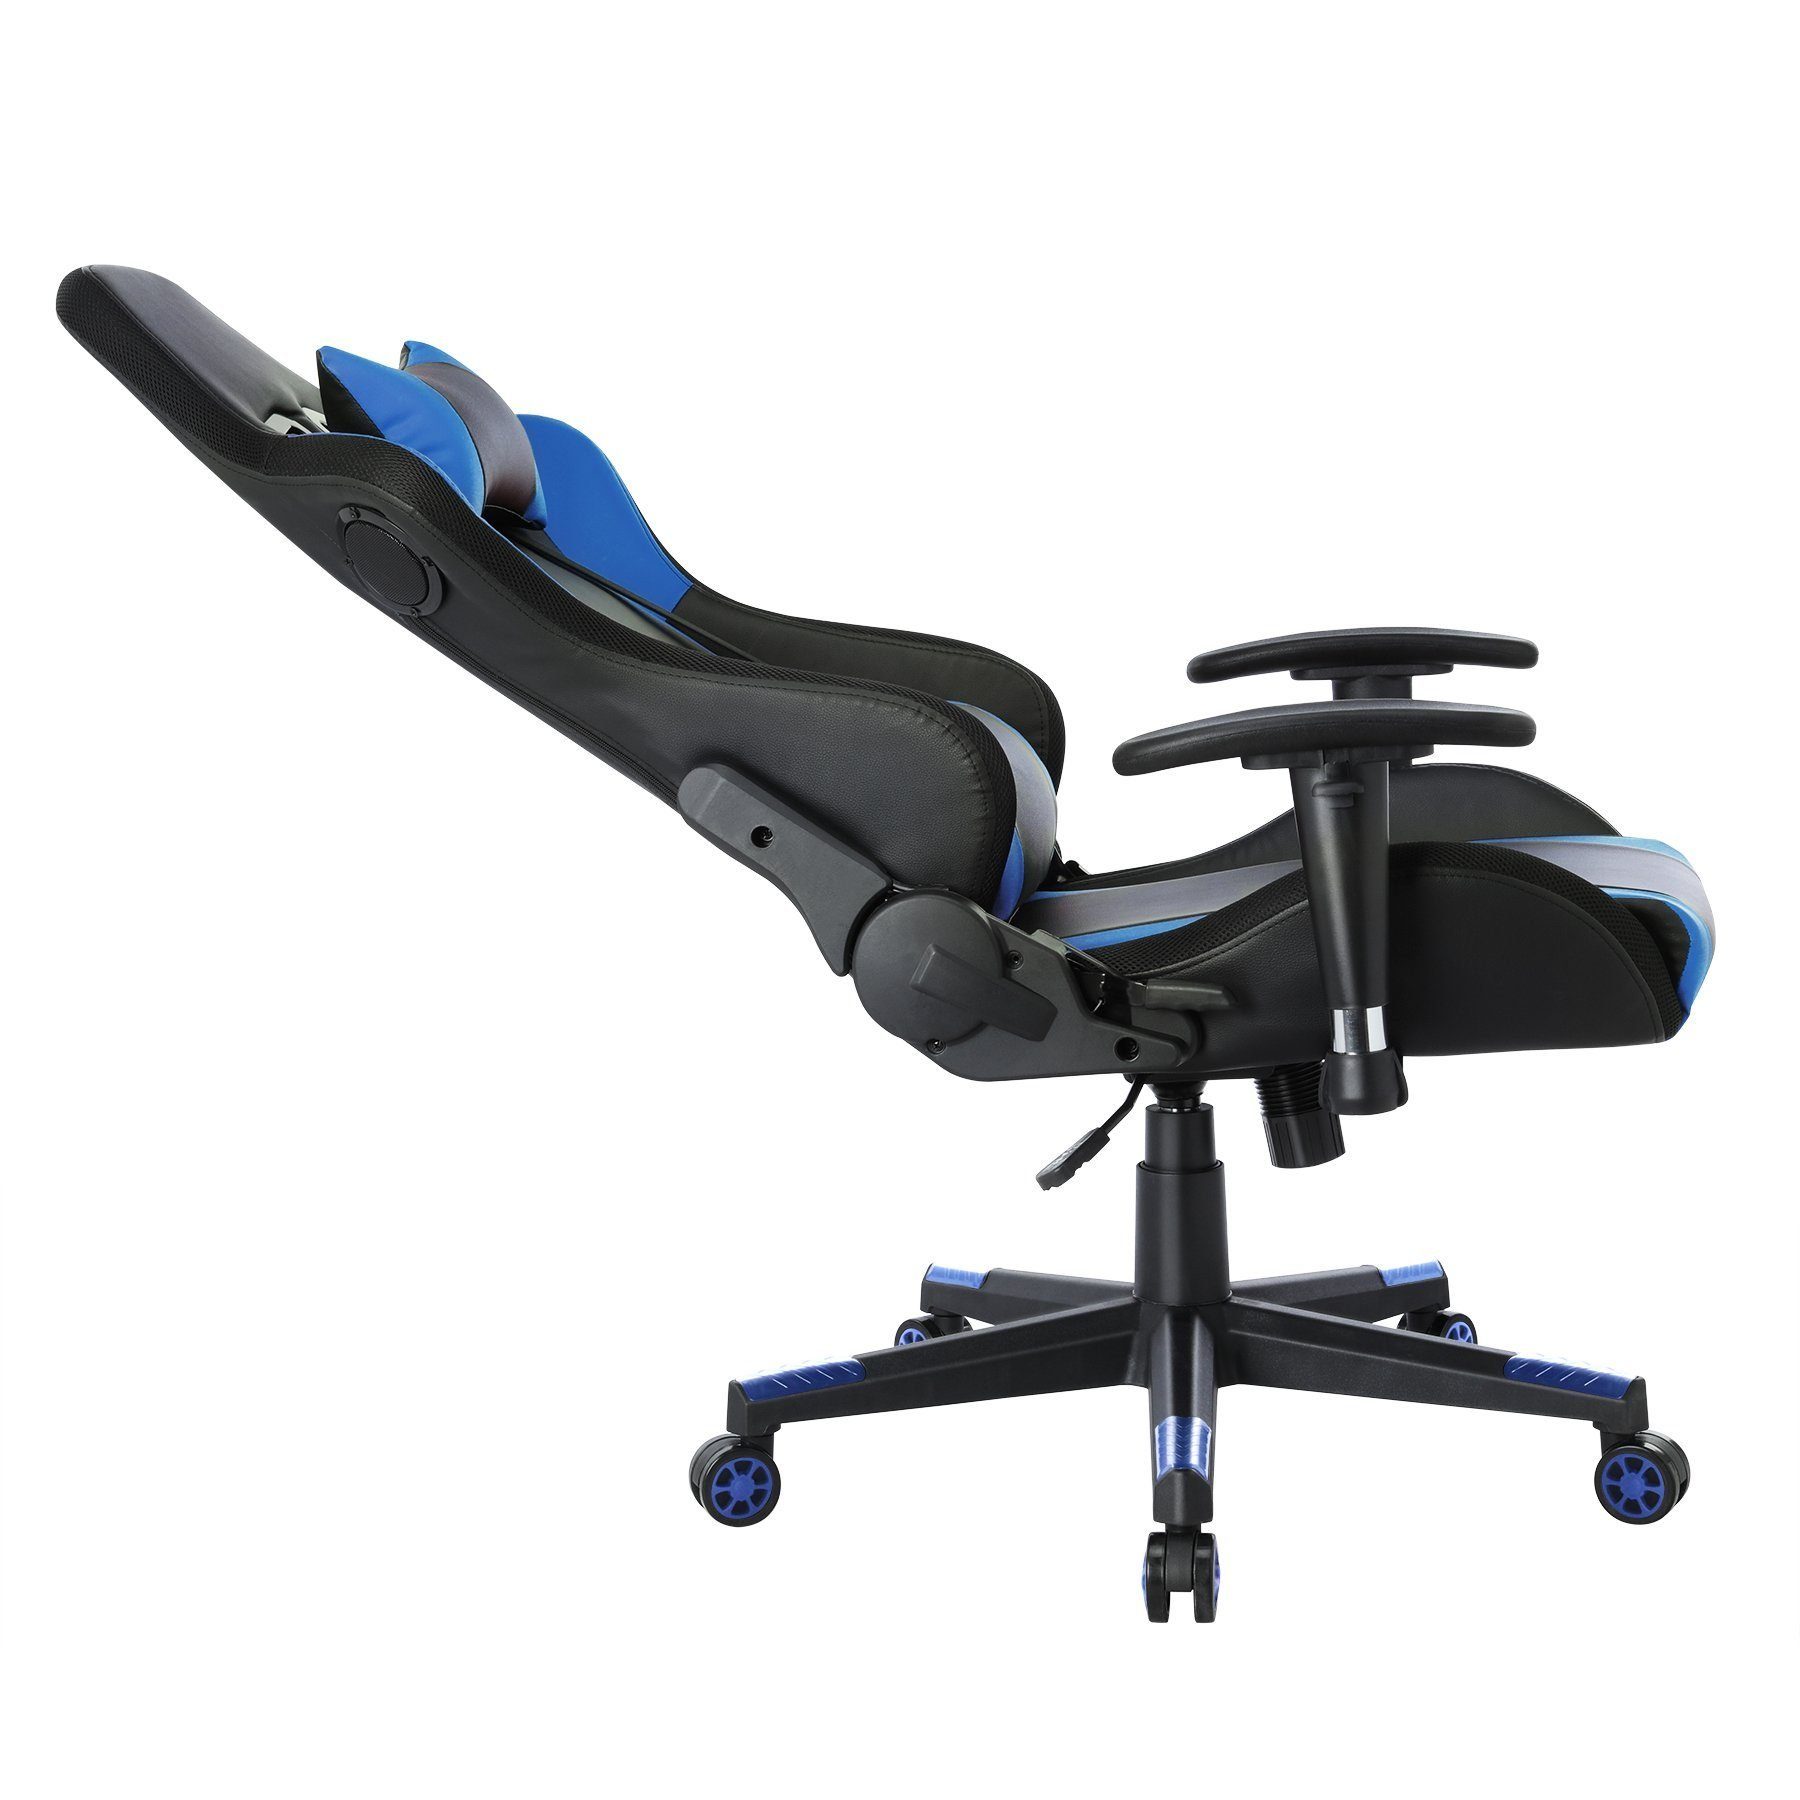 Chair Hoher ergonomischer Gaming LED-Leuchten Gaming Blau Lautsprechern Stuhl HomeMiYN Bürostuhl